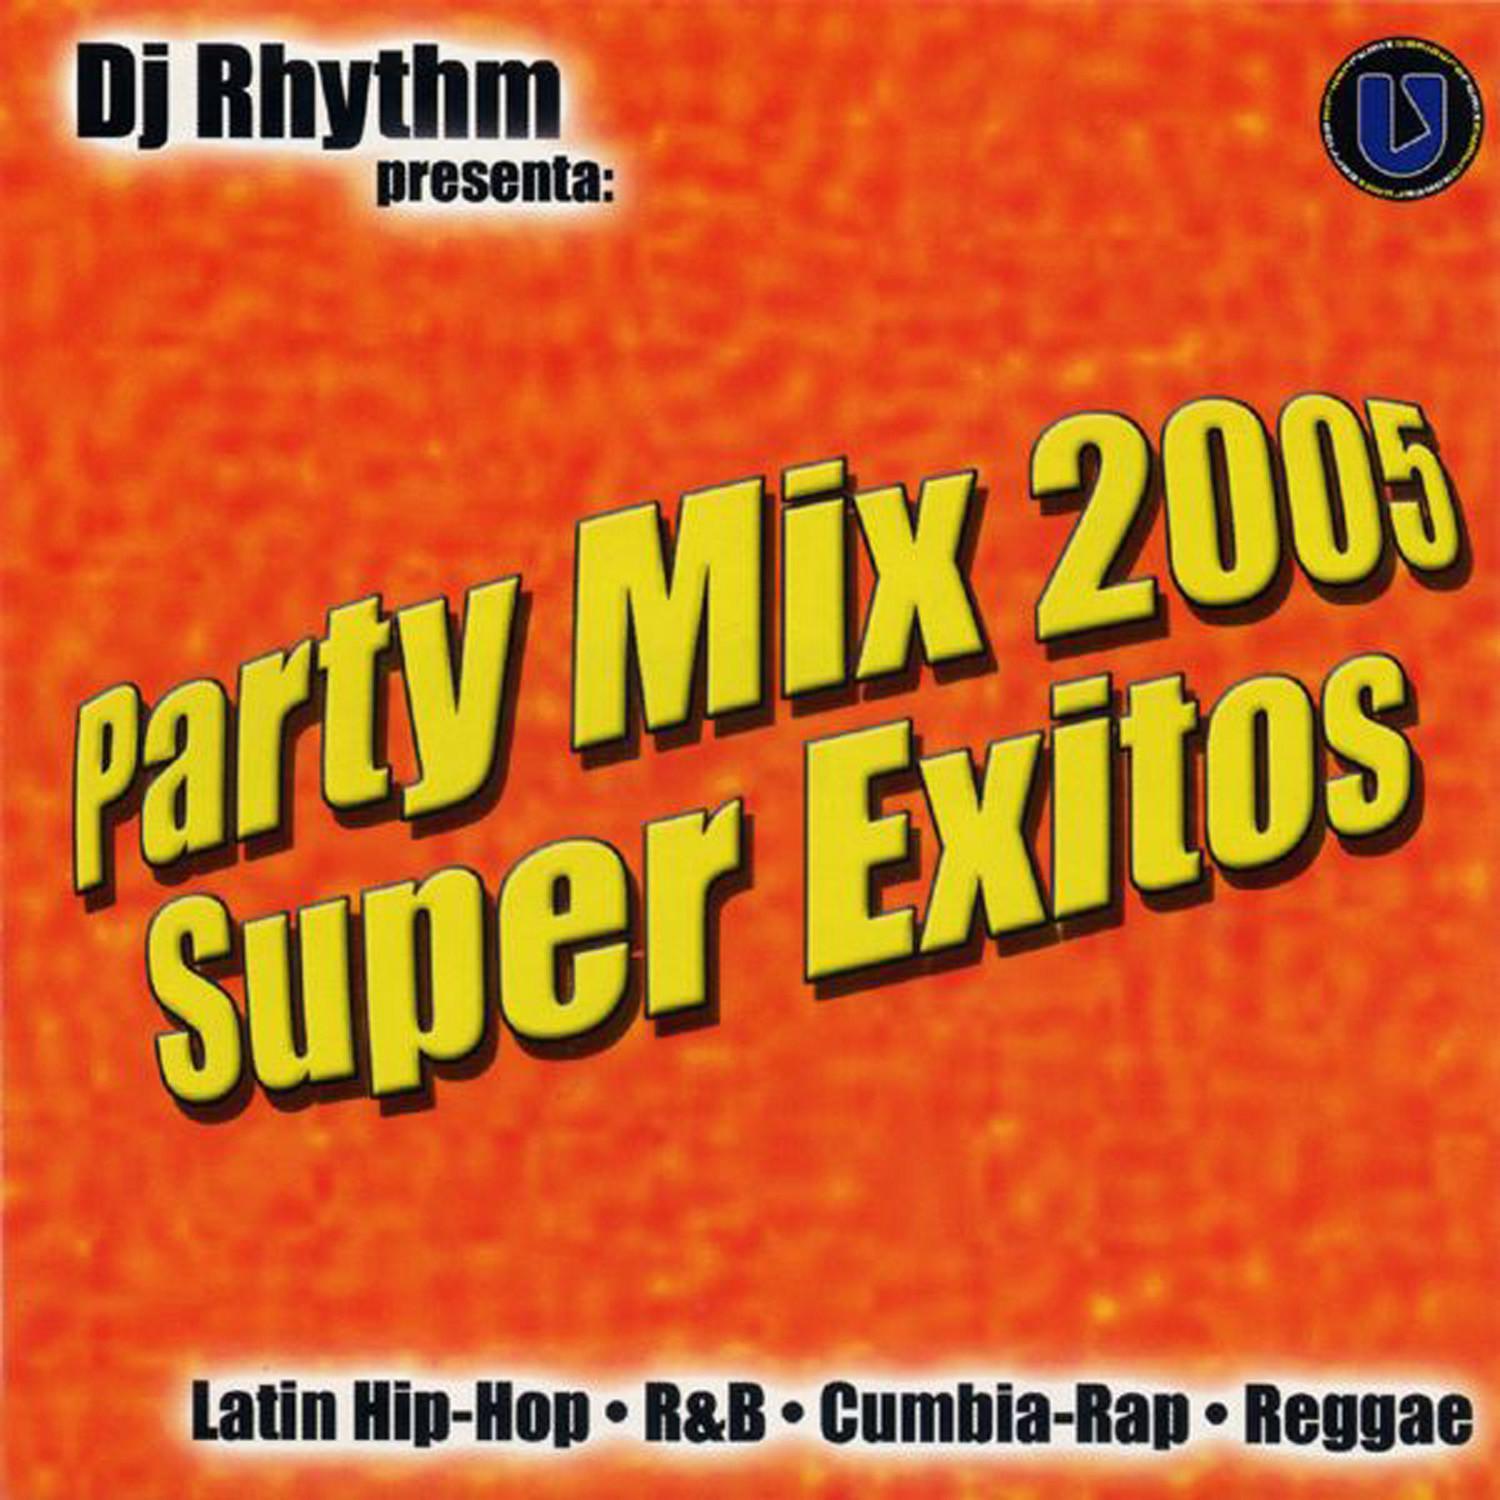 DJ Rhythm Presents Party Mix 2005 Super Exitos